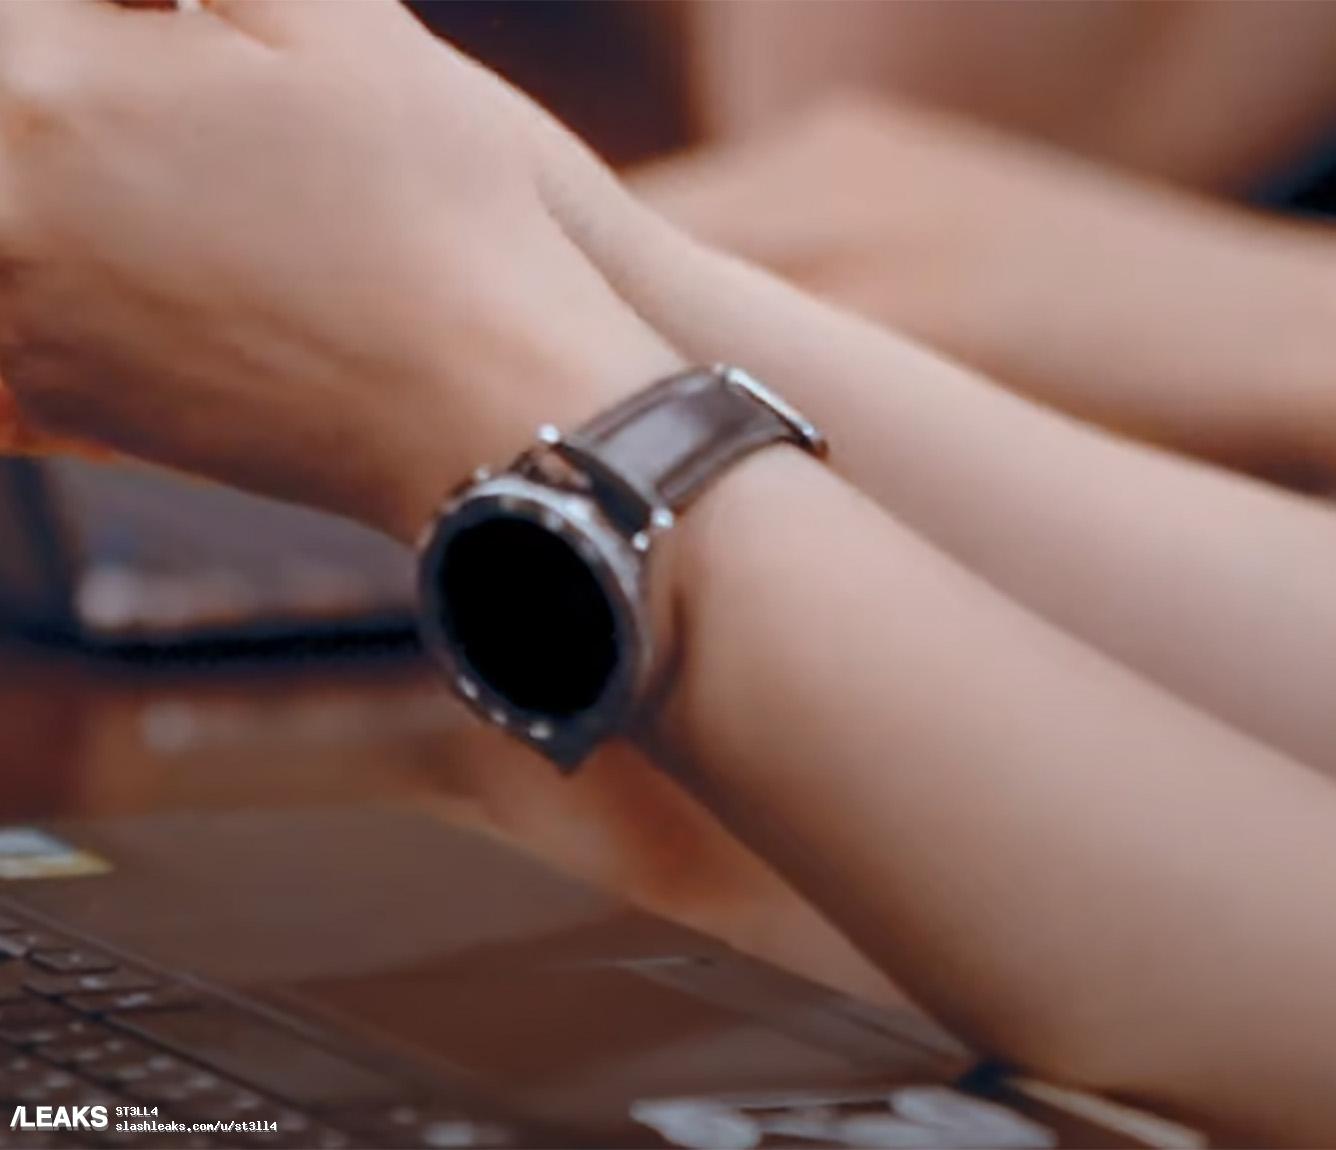 Samsung Galaxy Watch 42mm Deep